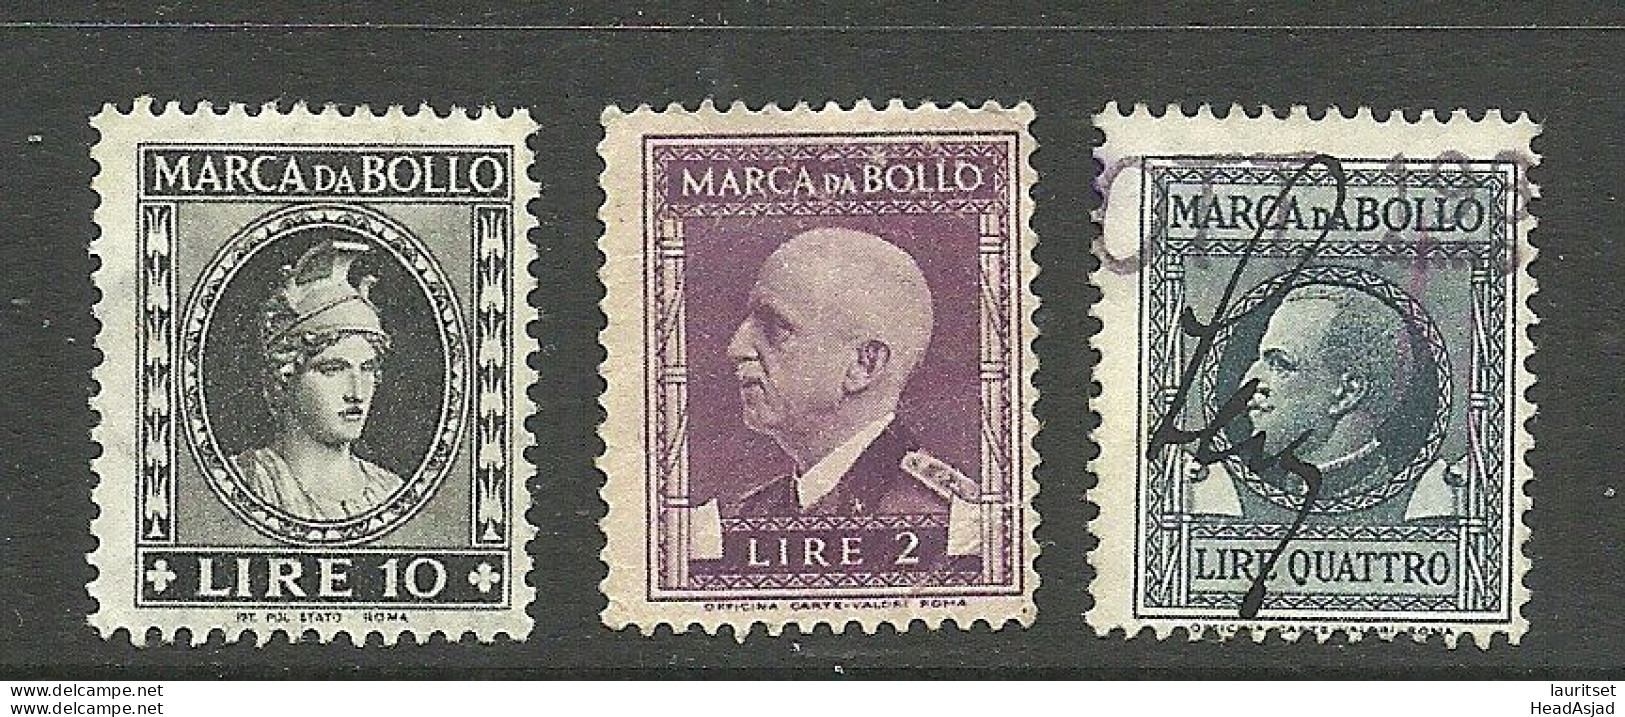 ITALIA ITALY 1920ies Revenue Marca Da Bollo Tax Taxe Steuermarken, 3 Pcs, Mint & Used - Revenue Stamps